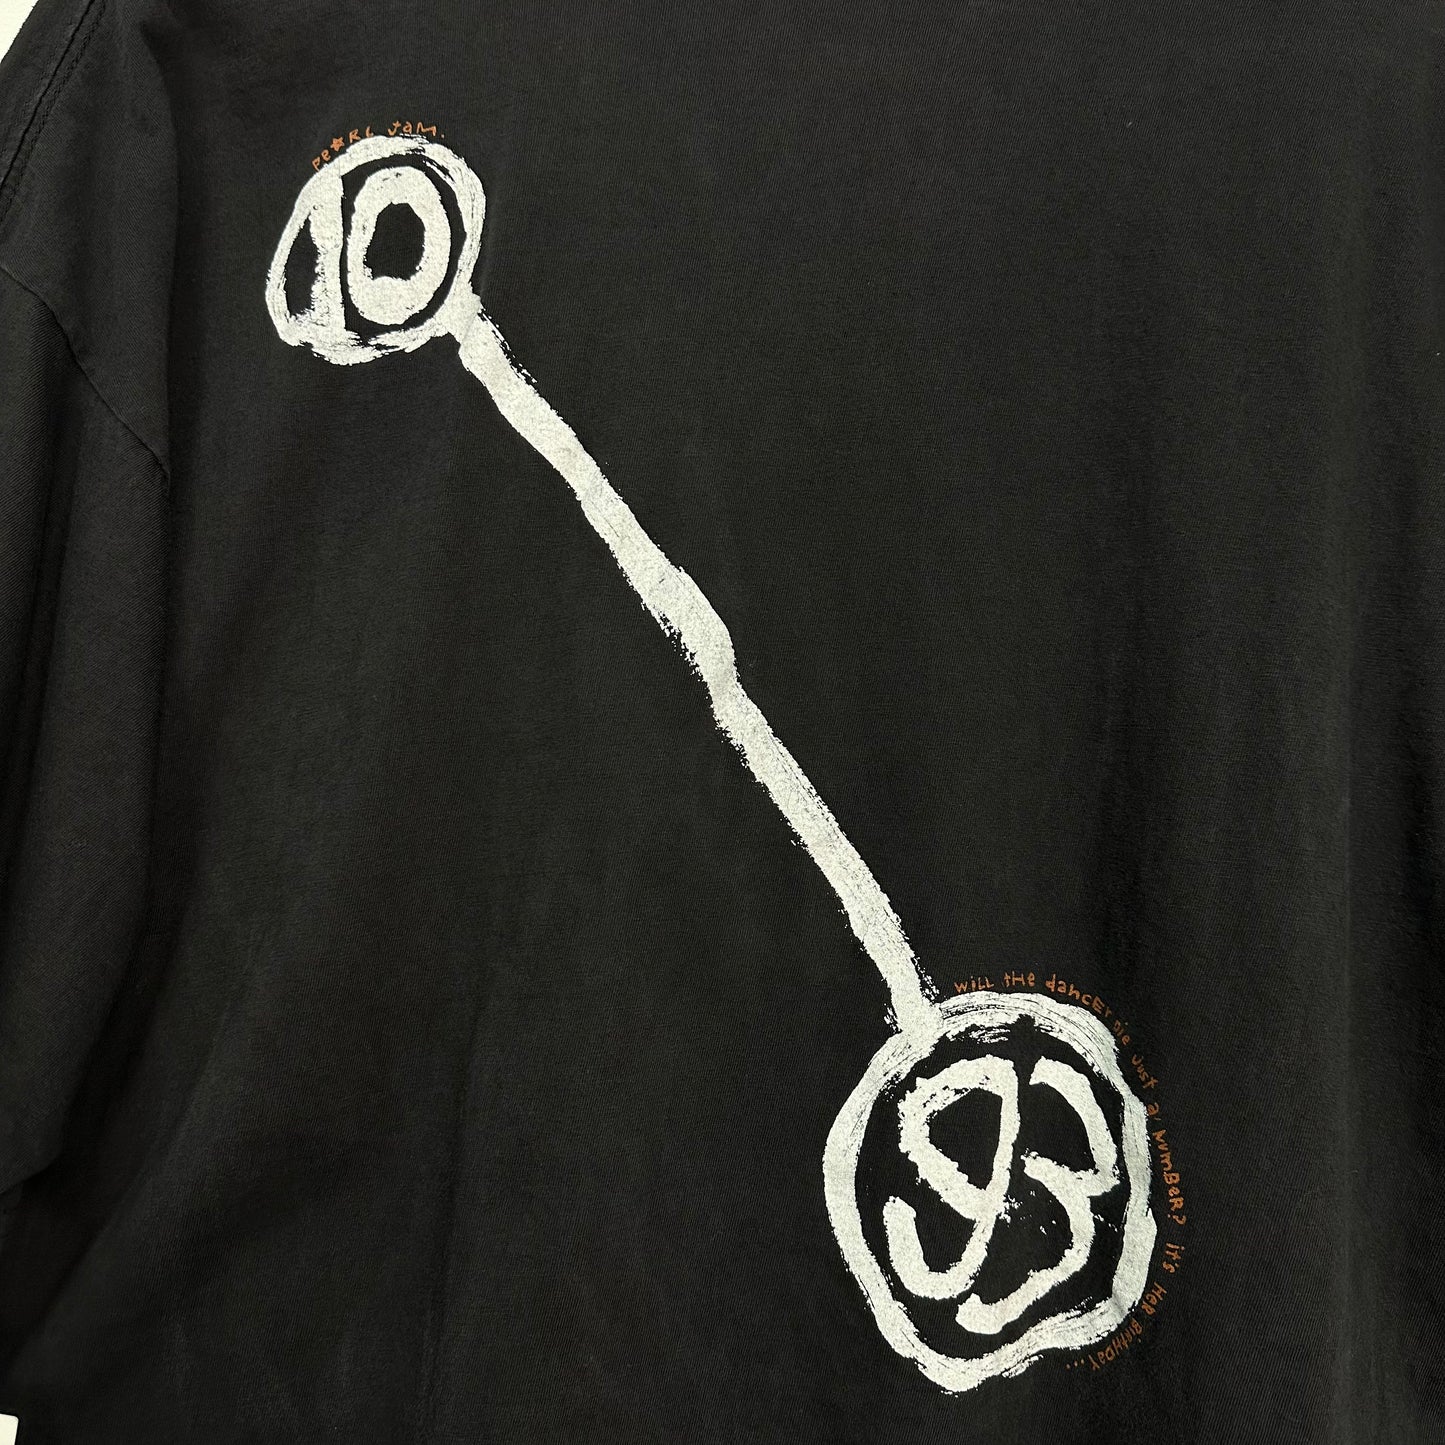 1993 Pearl Jam Reject Shirt - XL